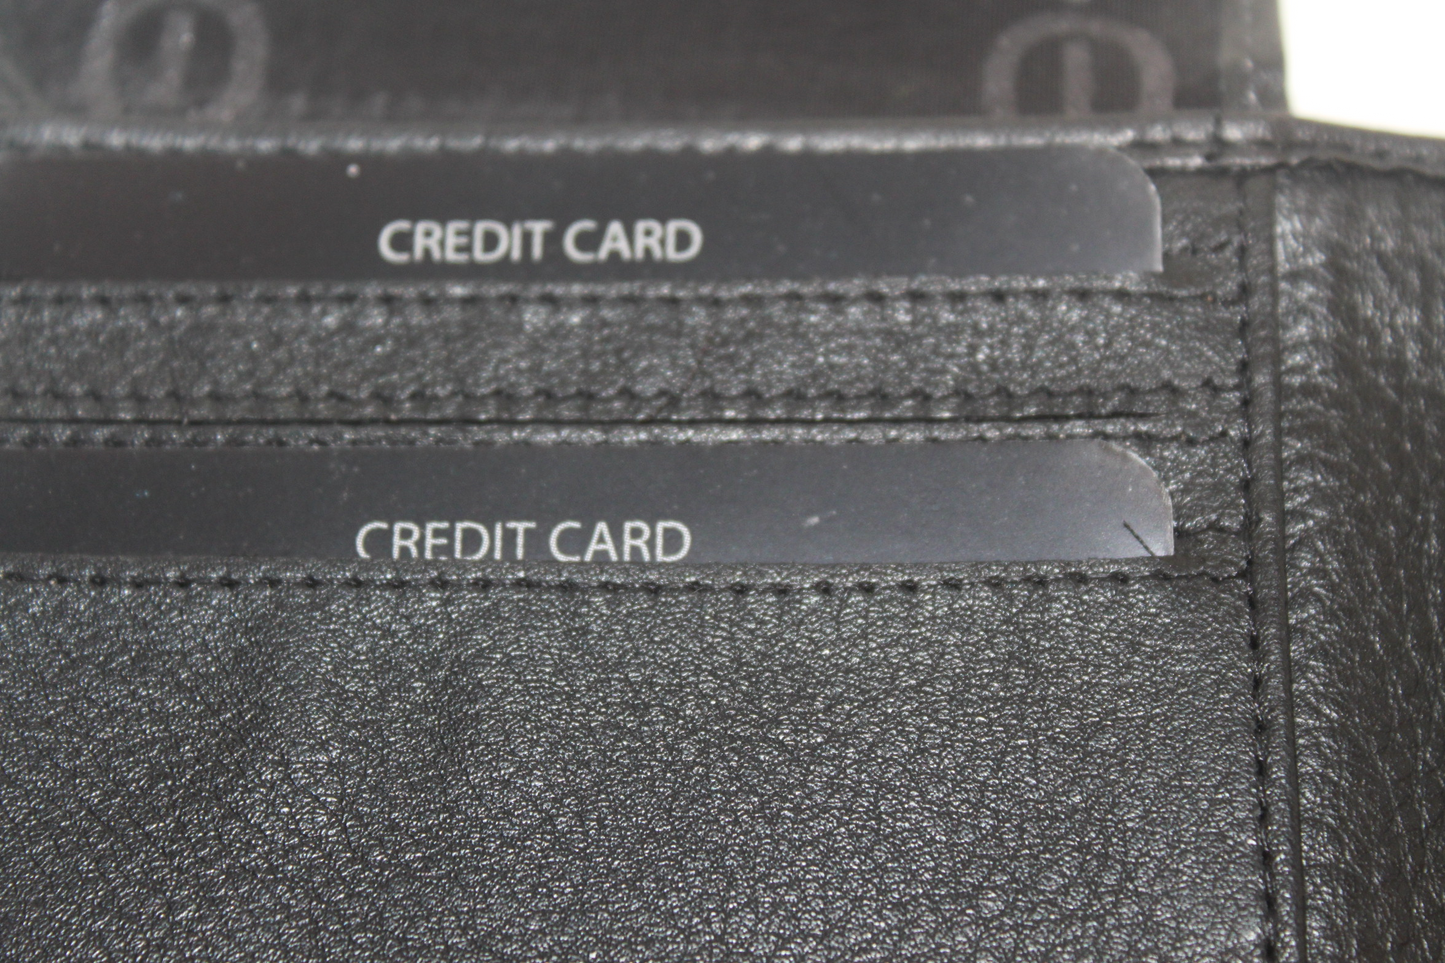 OI Heren portemonnee 11 creditcards RFID safe / Anti skim 110